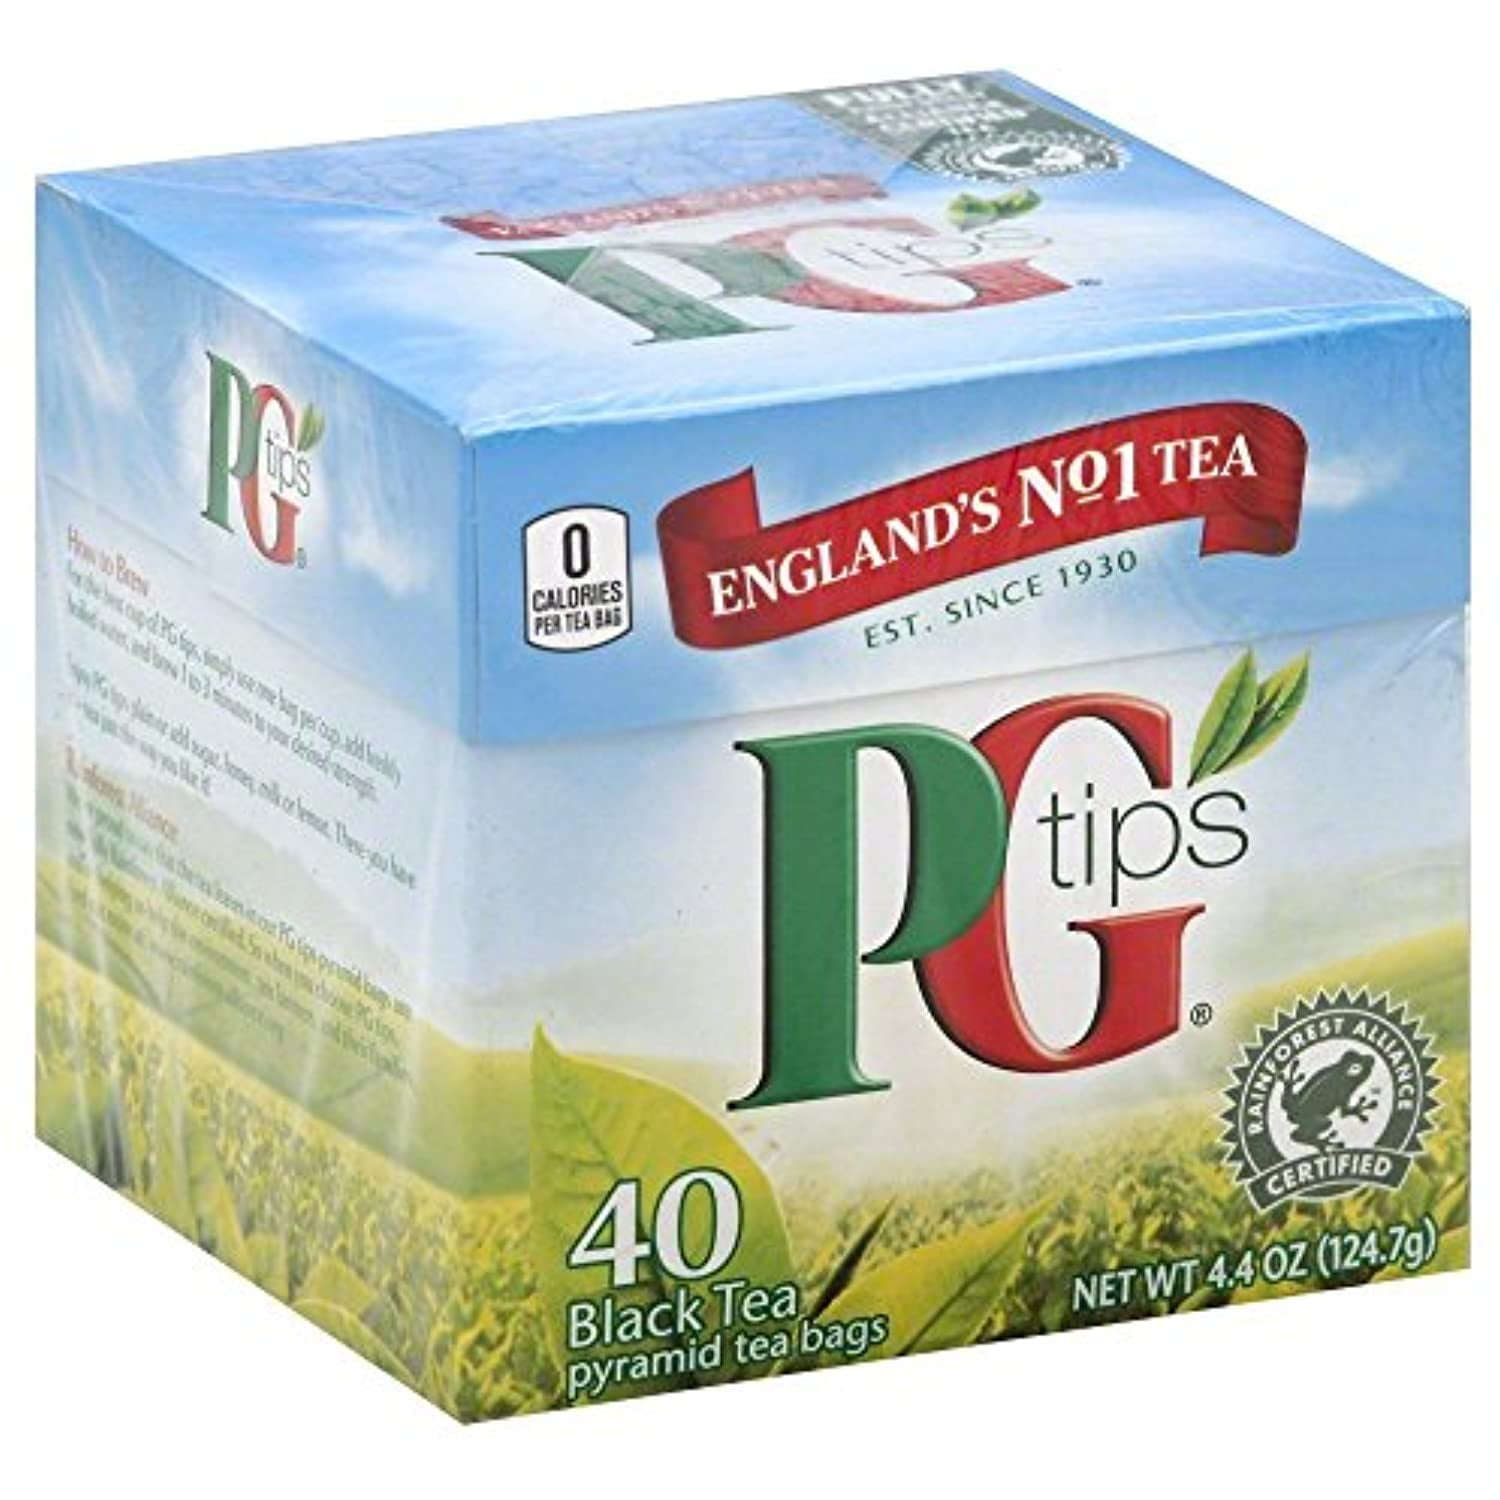 PG tips Premium Black Tea Black Tea Pyramid Tea Bags - 40ct